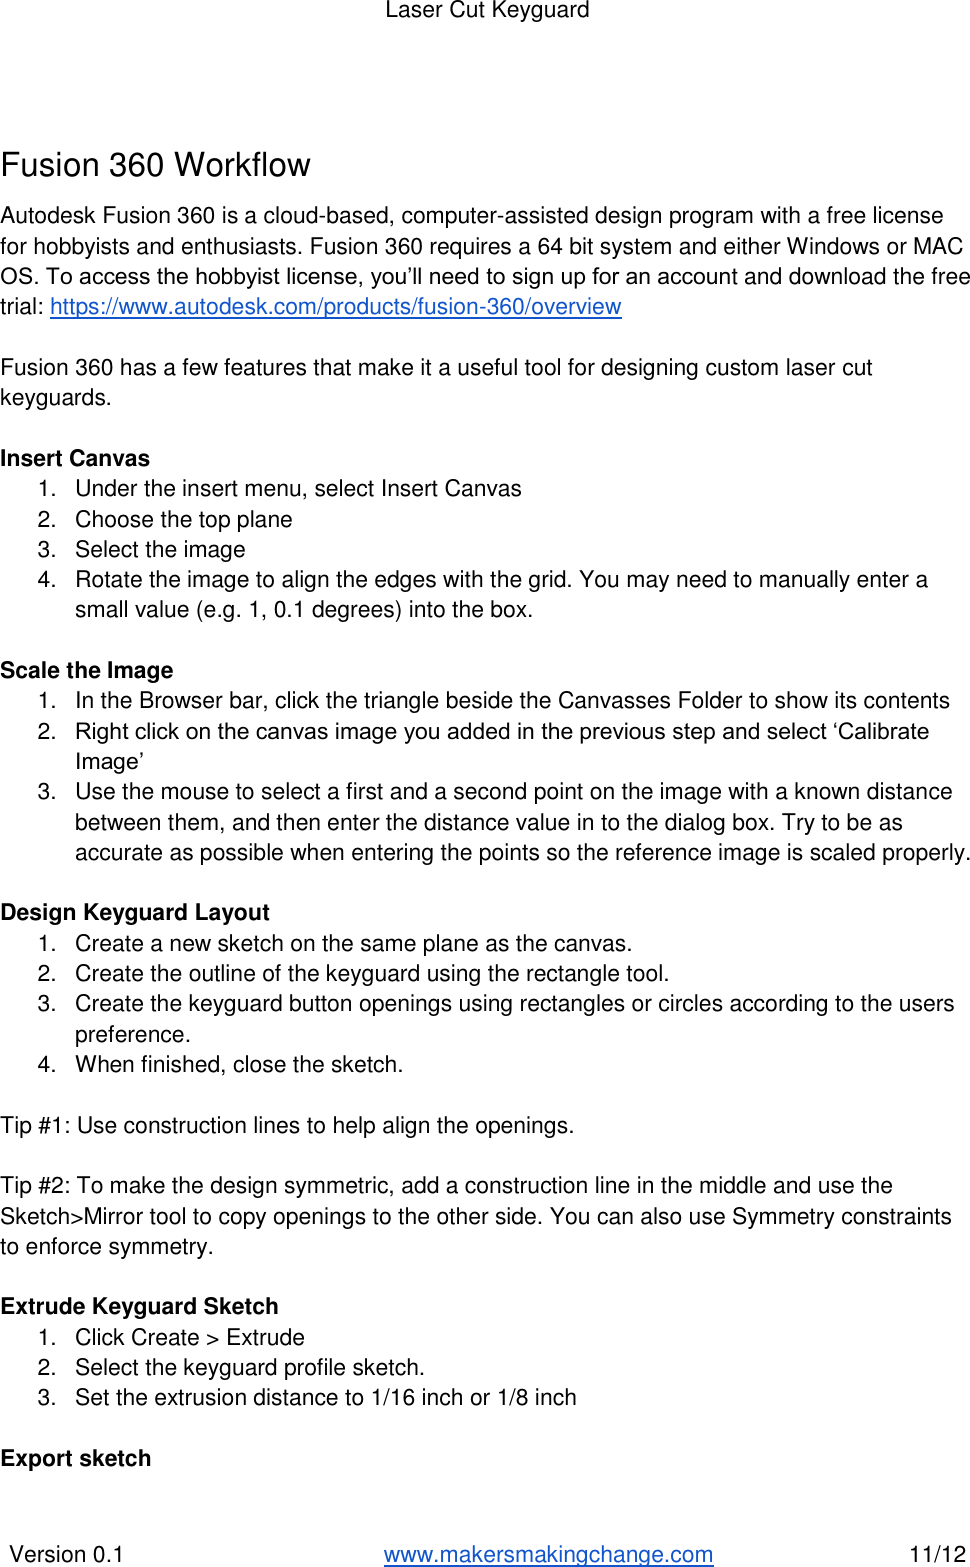 Page 11 of 12 - Lasercut Keyguard Instructions V0.1